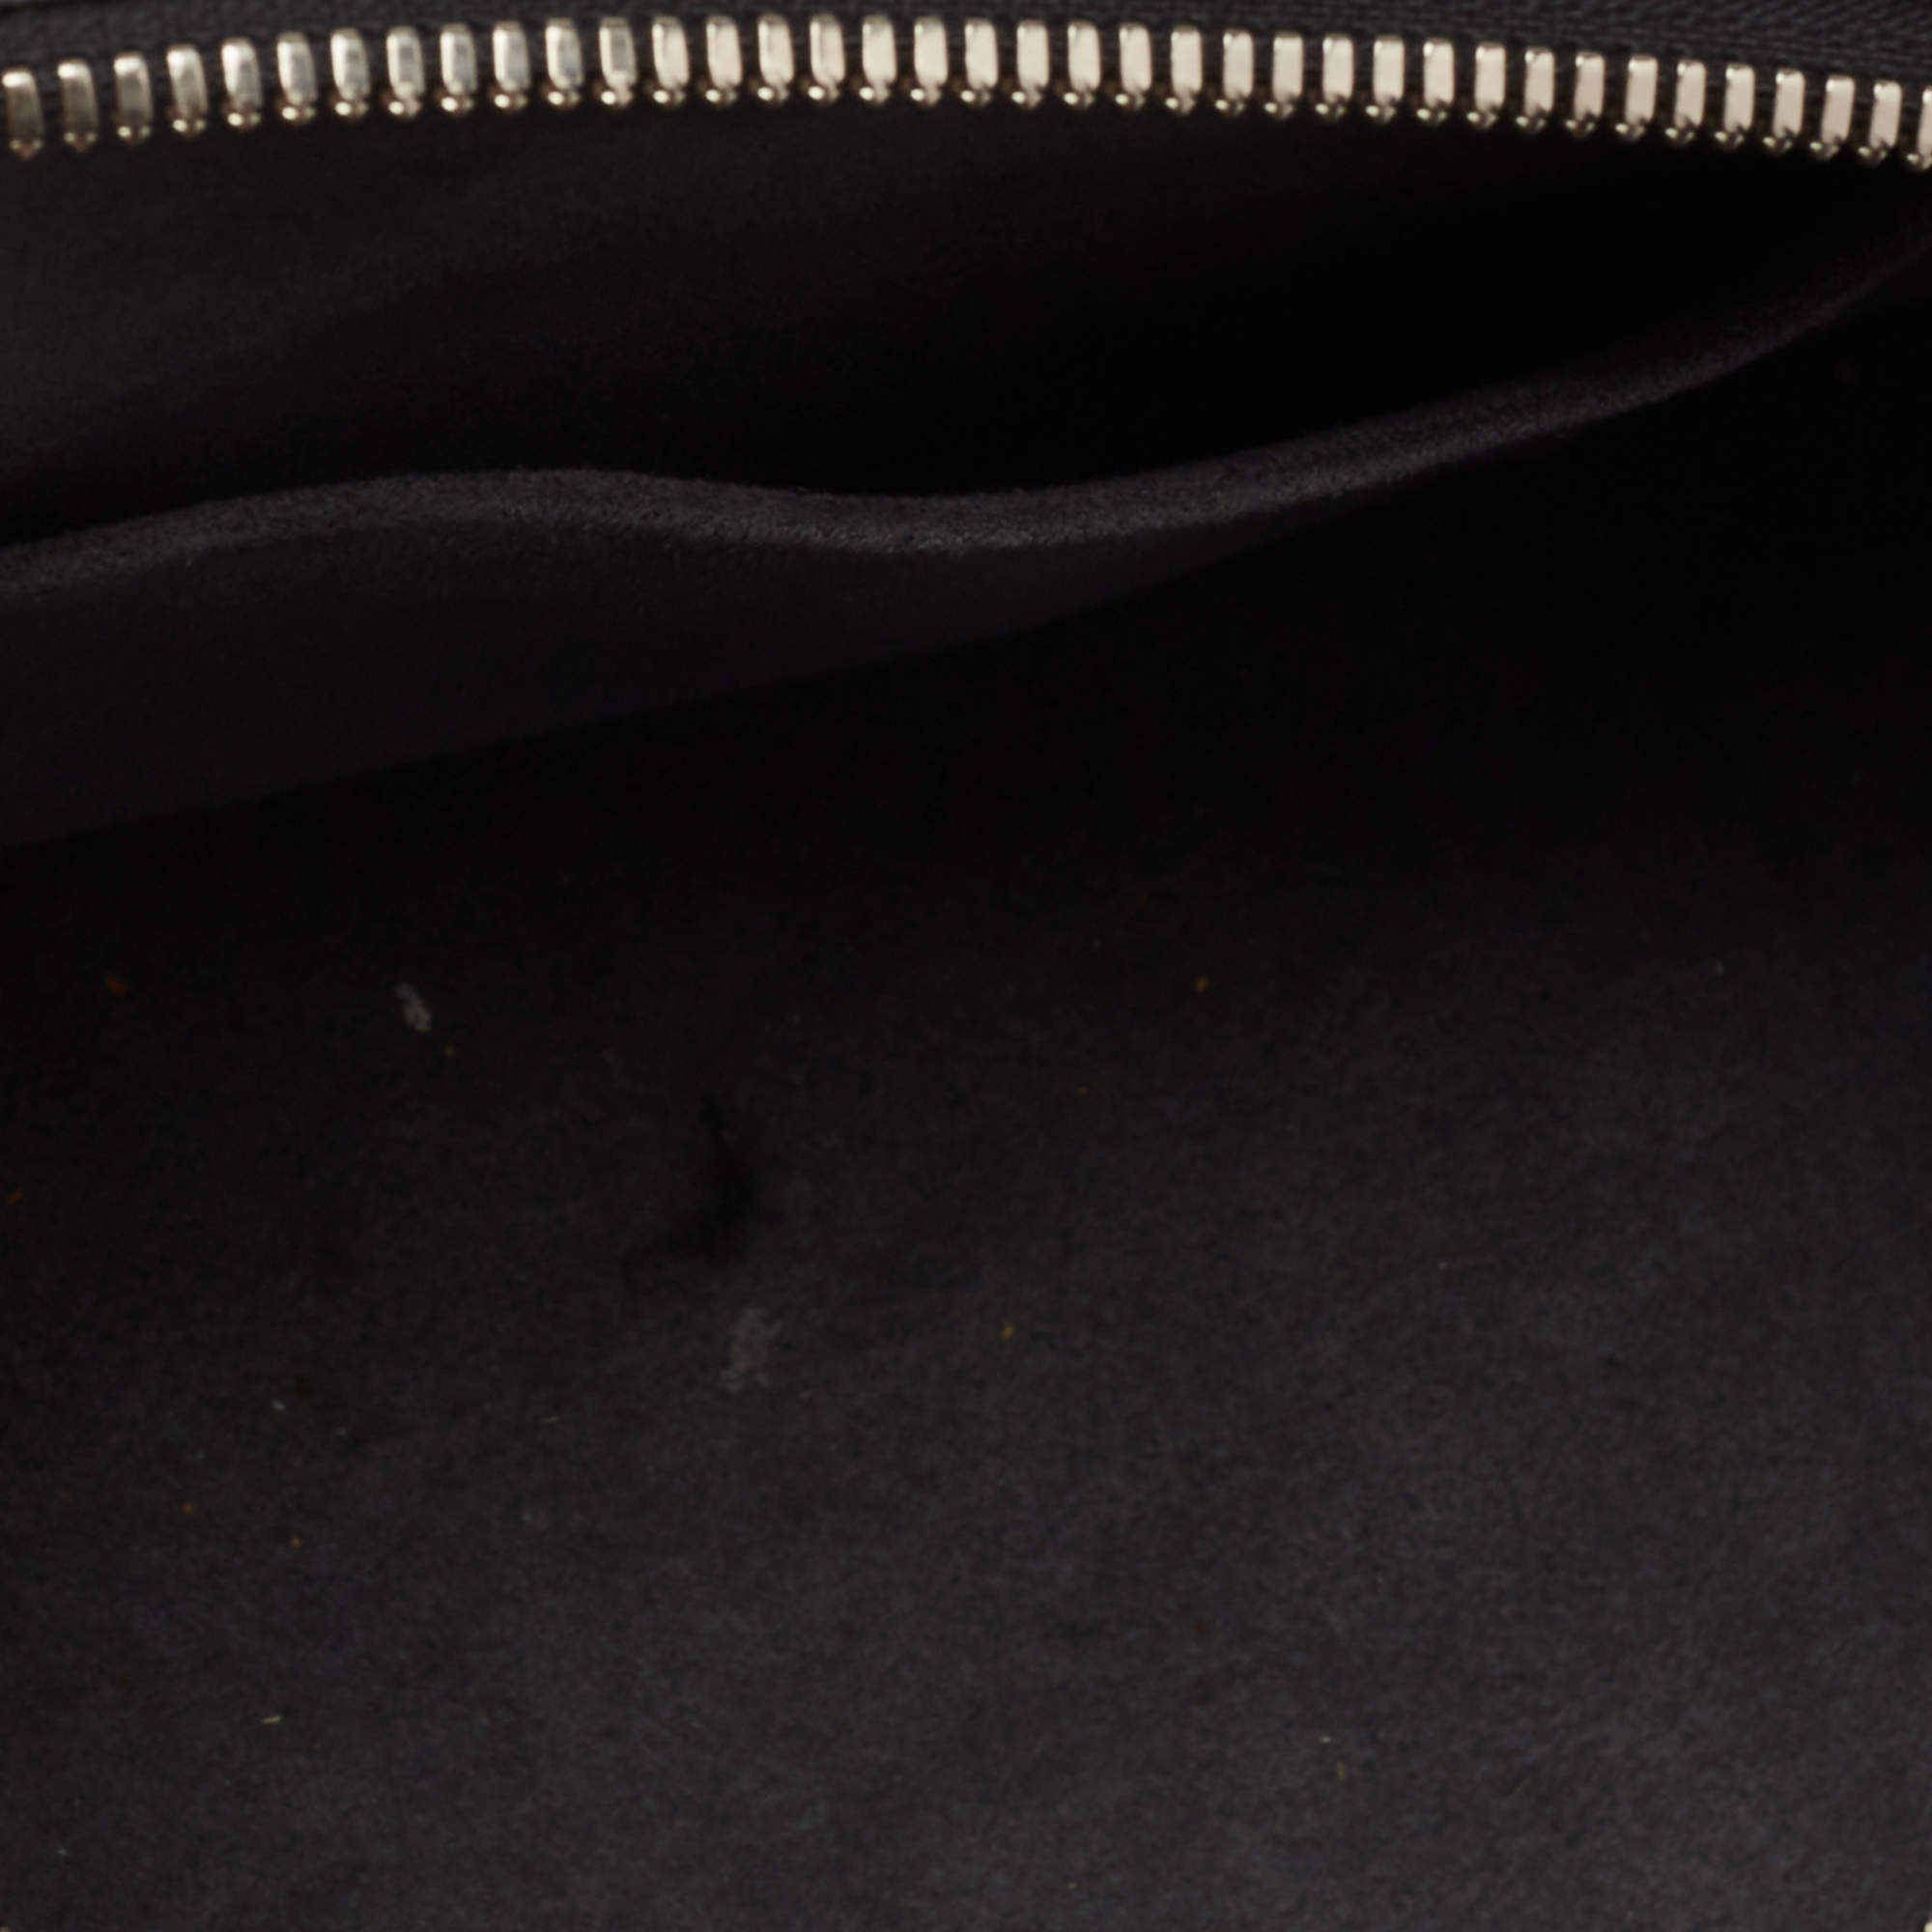 Alma bb leather mini bag Louis Vuitton Black in Leather - 17963902